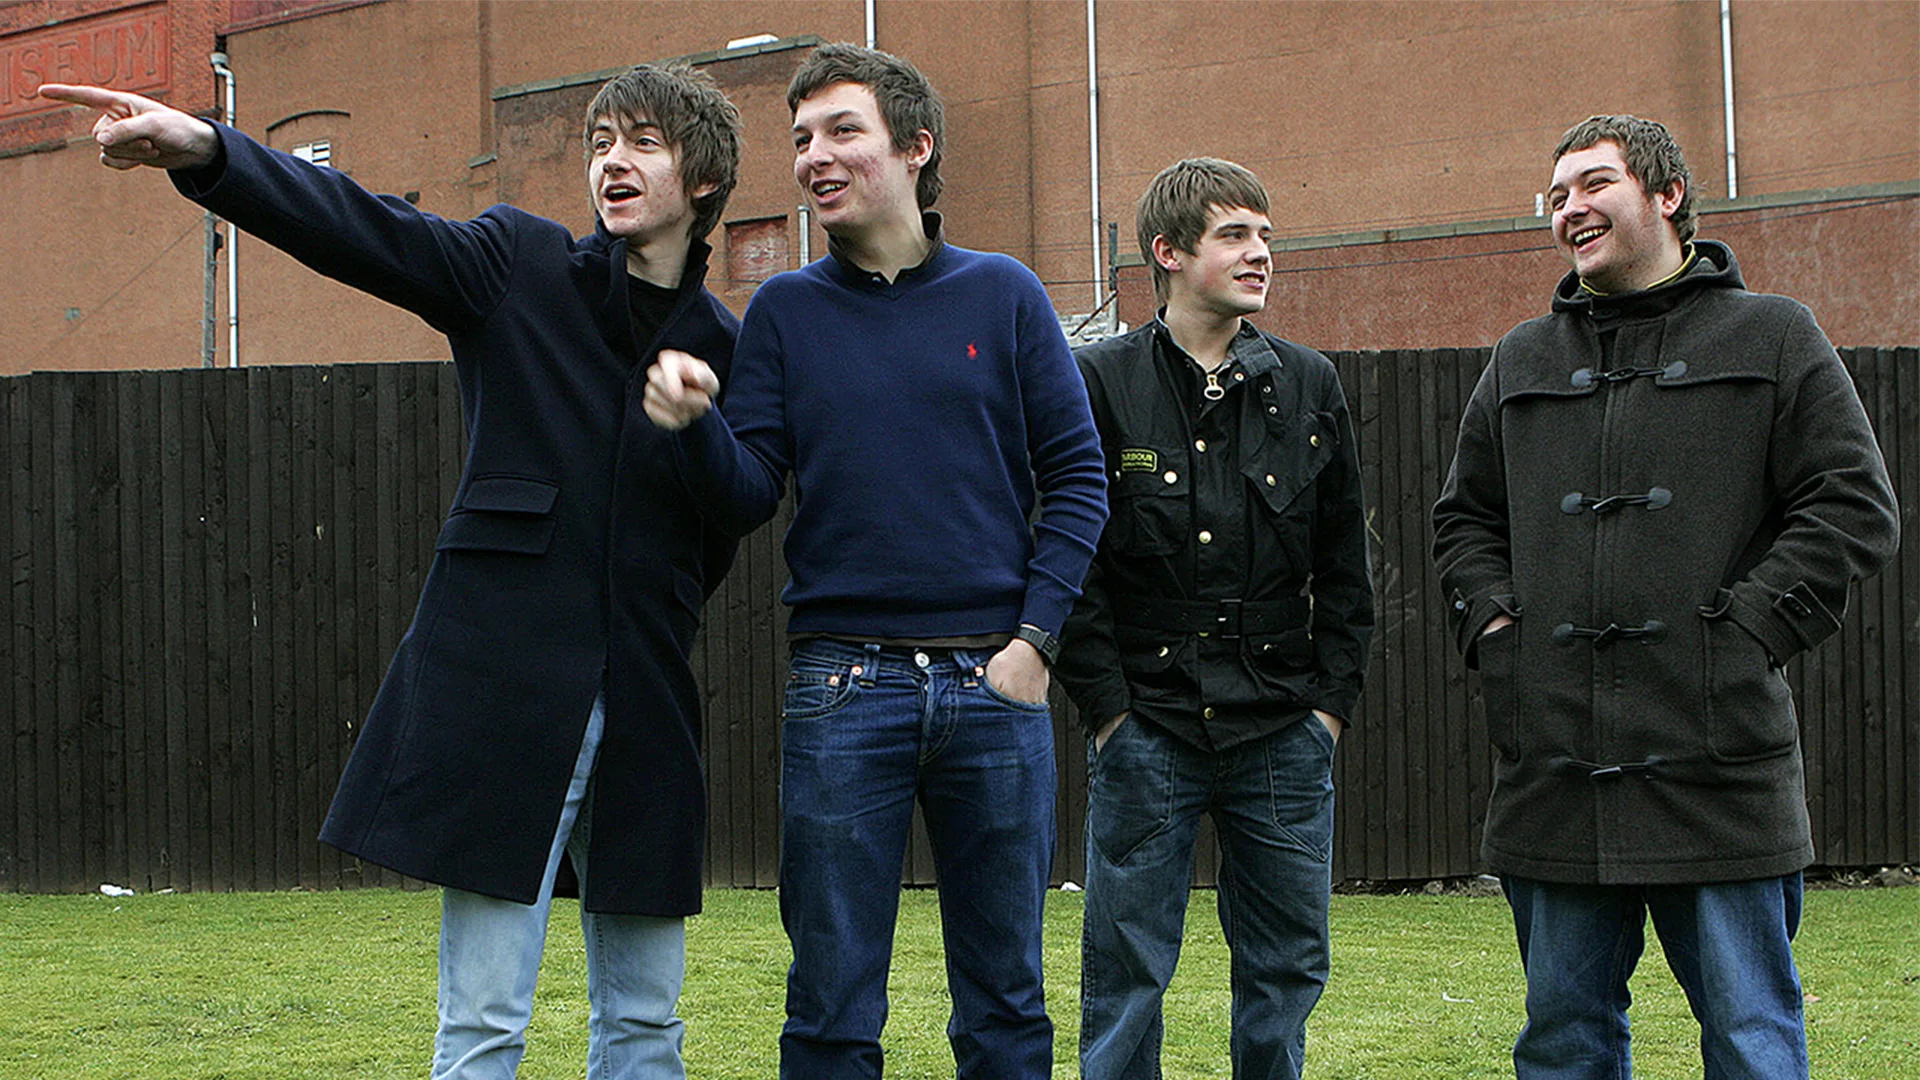 Arctic Monkeys from left, Alex Turner, vocals, Matt Helders, drums, Jamie Cook, guitar, and Andy Nicholson, bass.